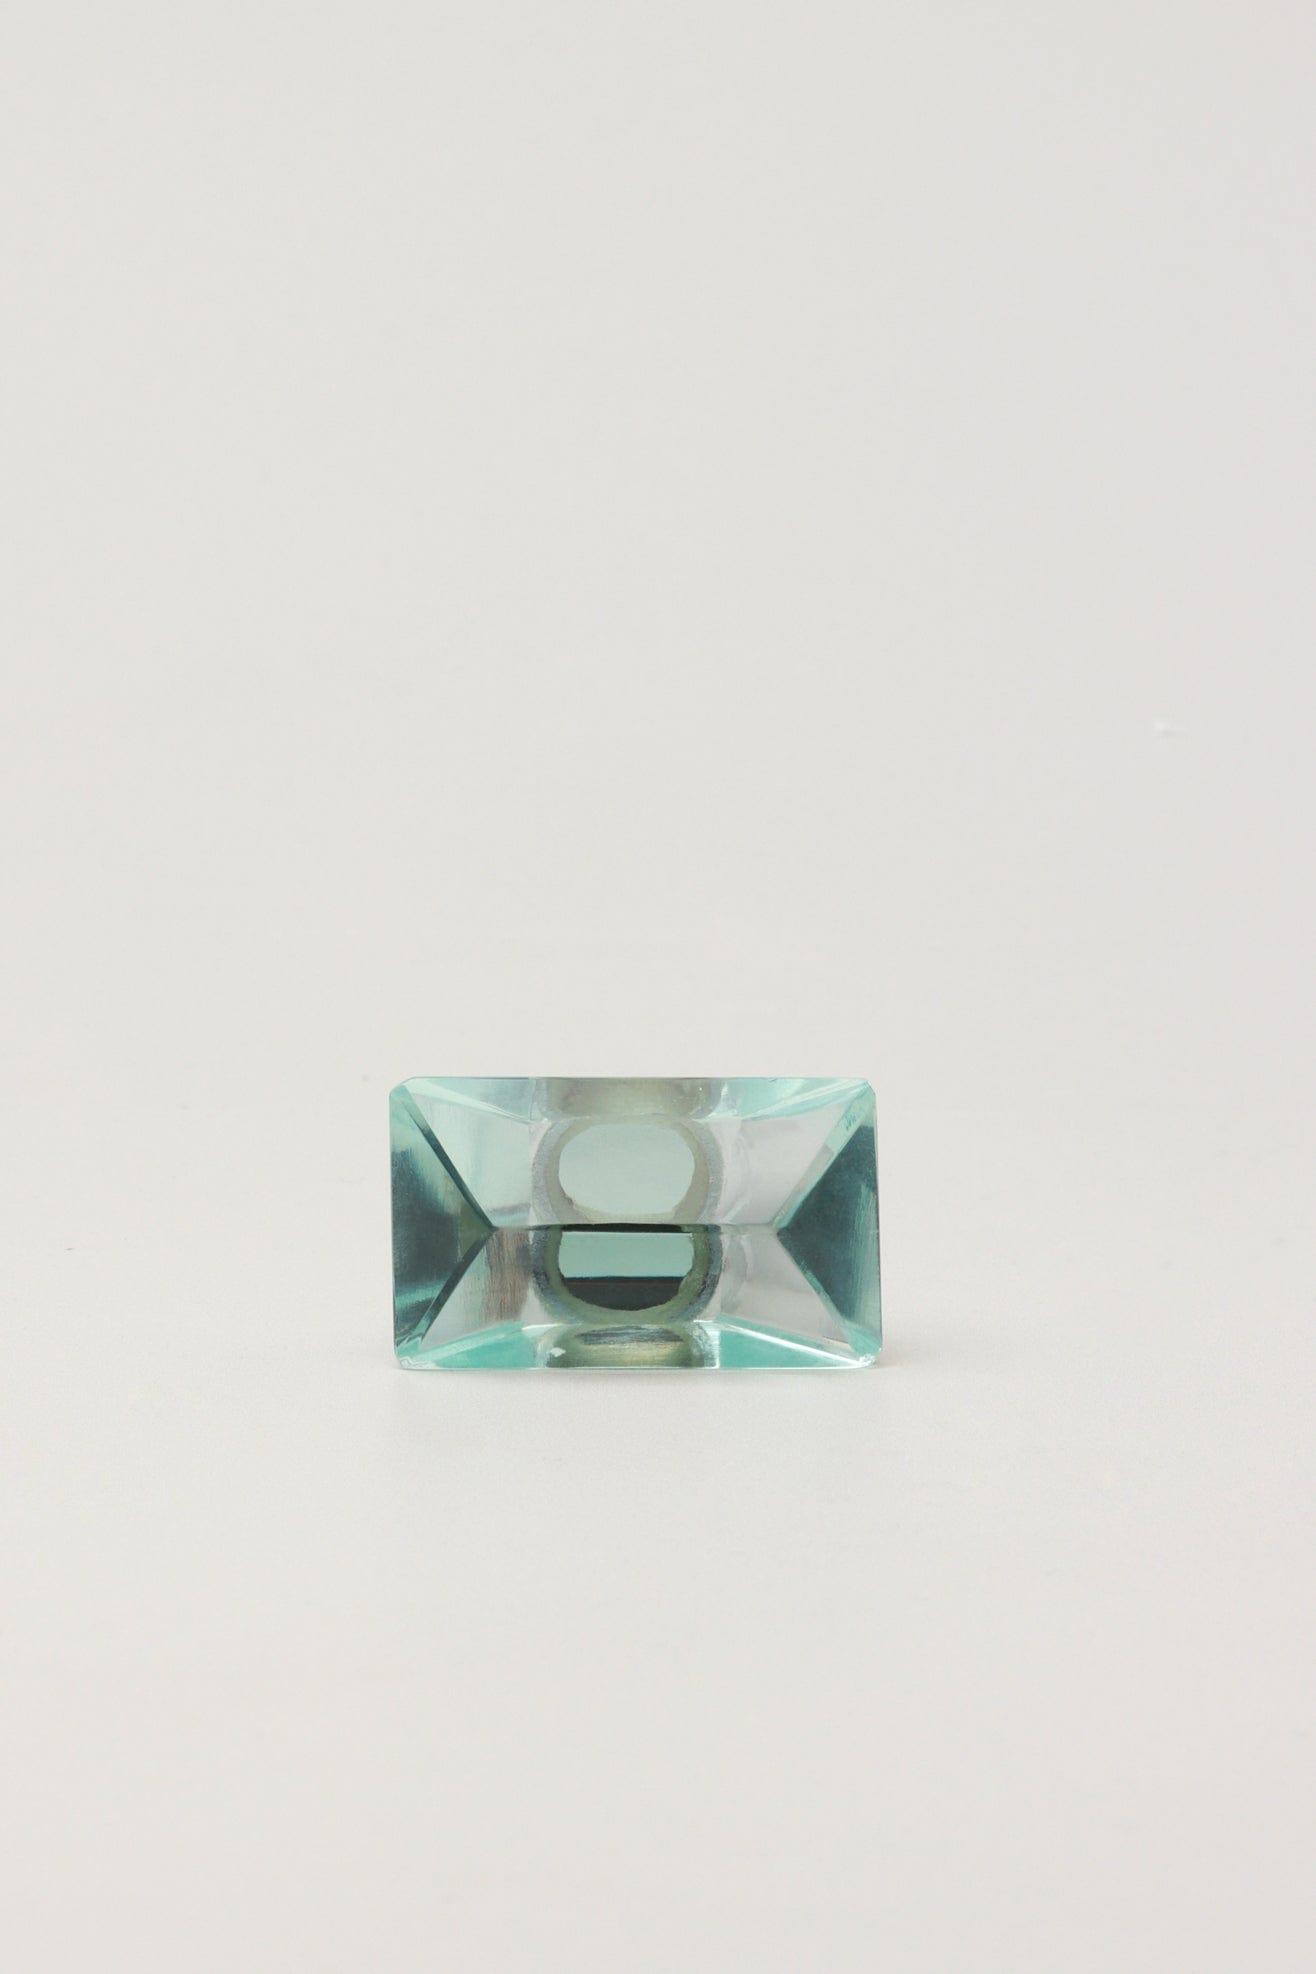 G Decor Cabinet Knobs & Handles Light Blue Javier Crystal Rectangular Mirror Glass Pull Knobs